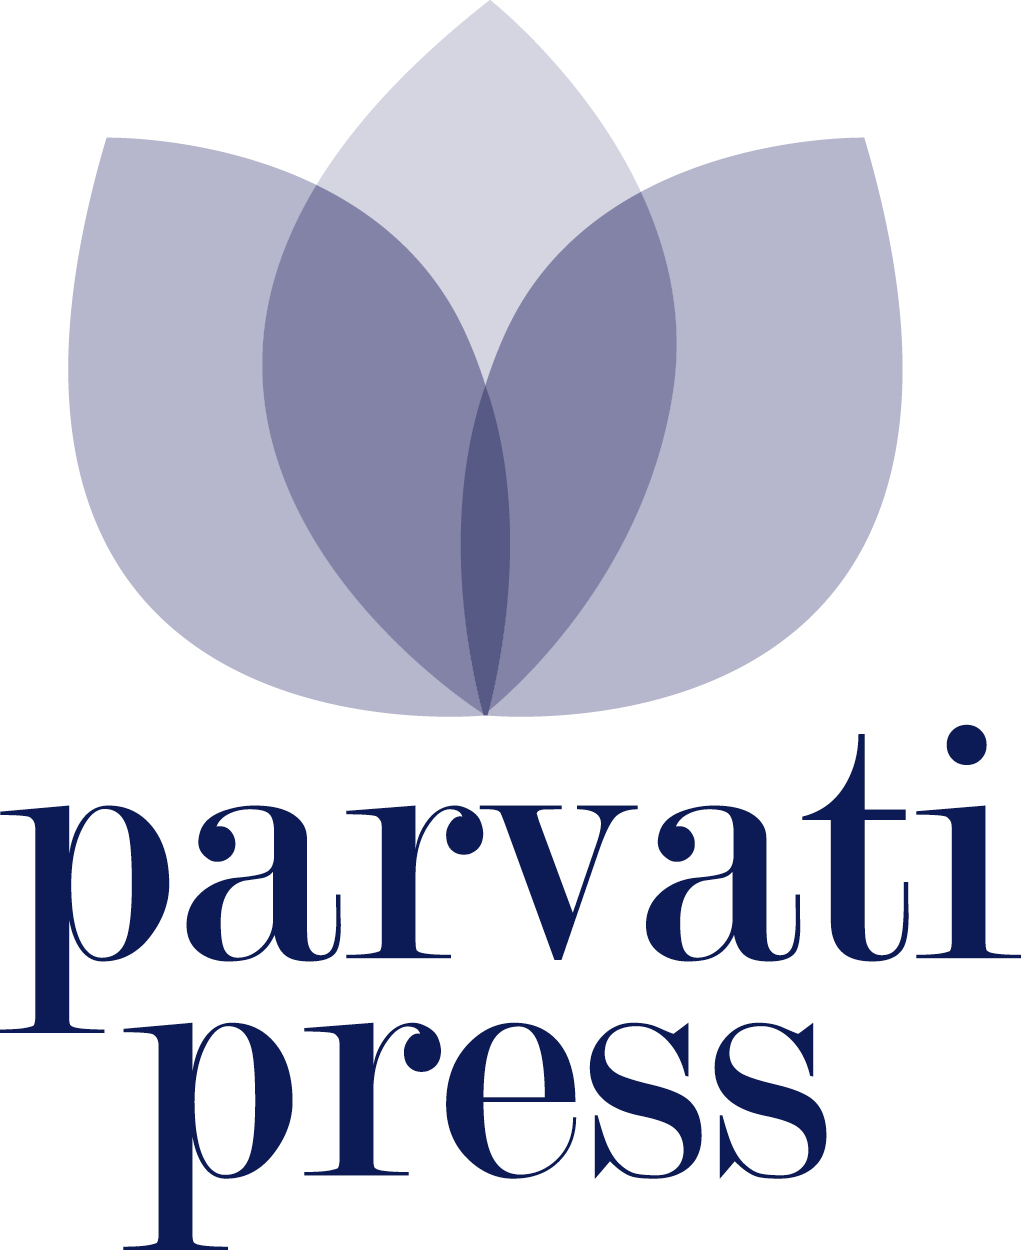 parvati press logo